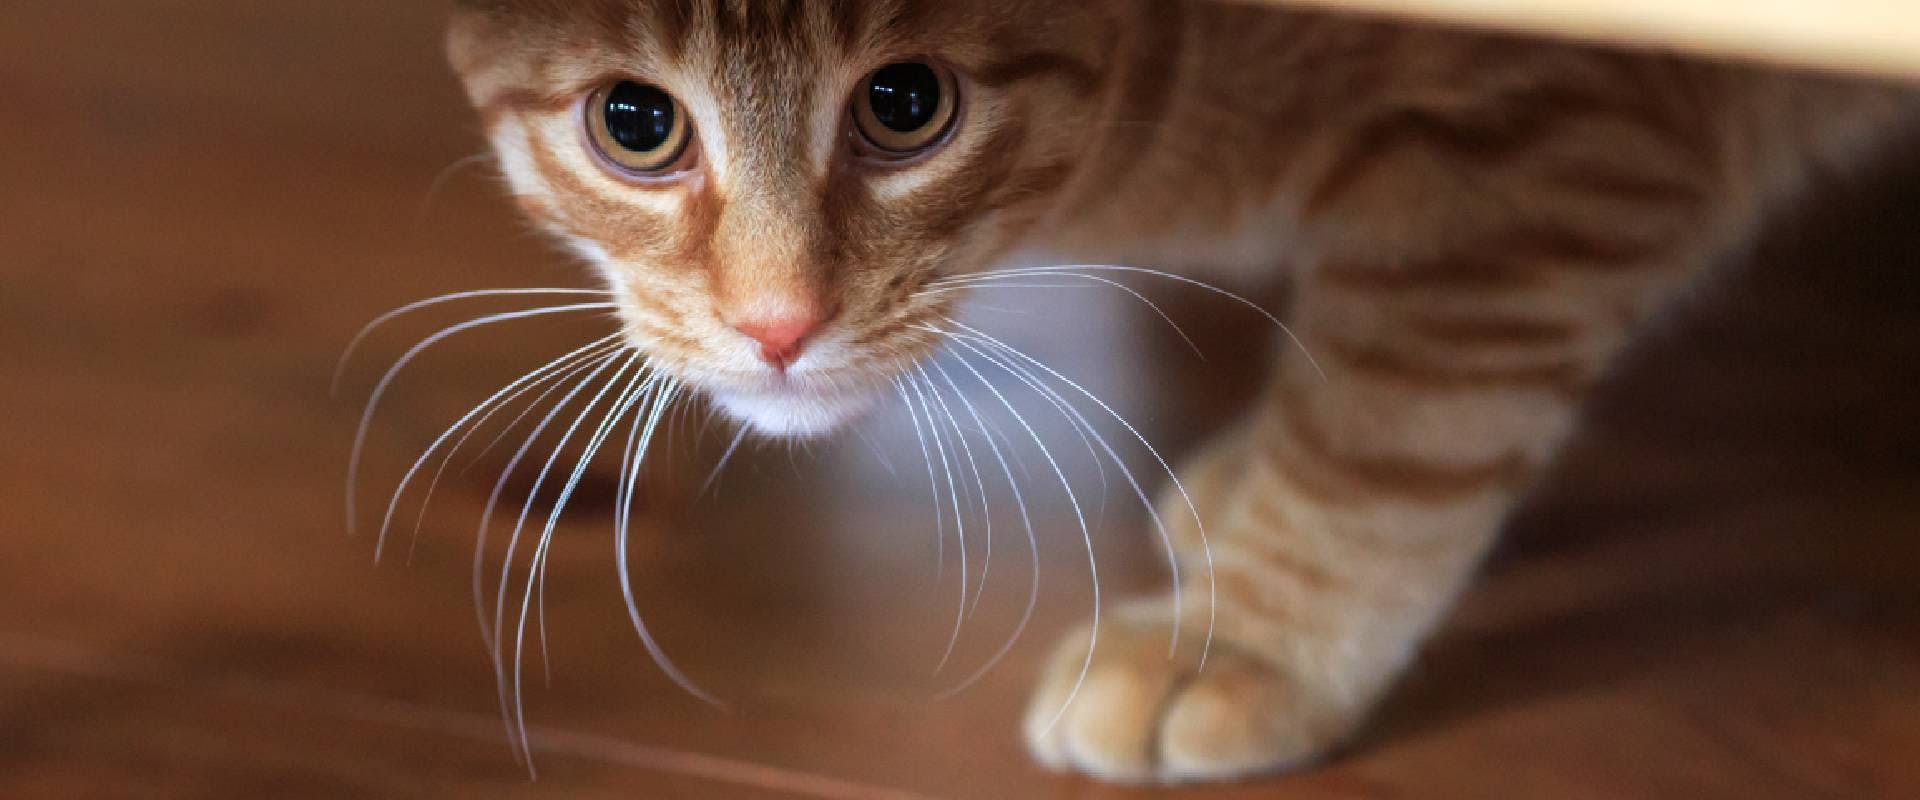 Scared ginger cat